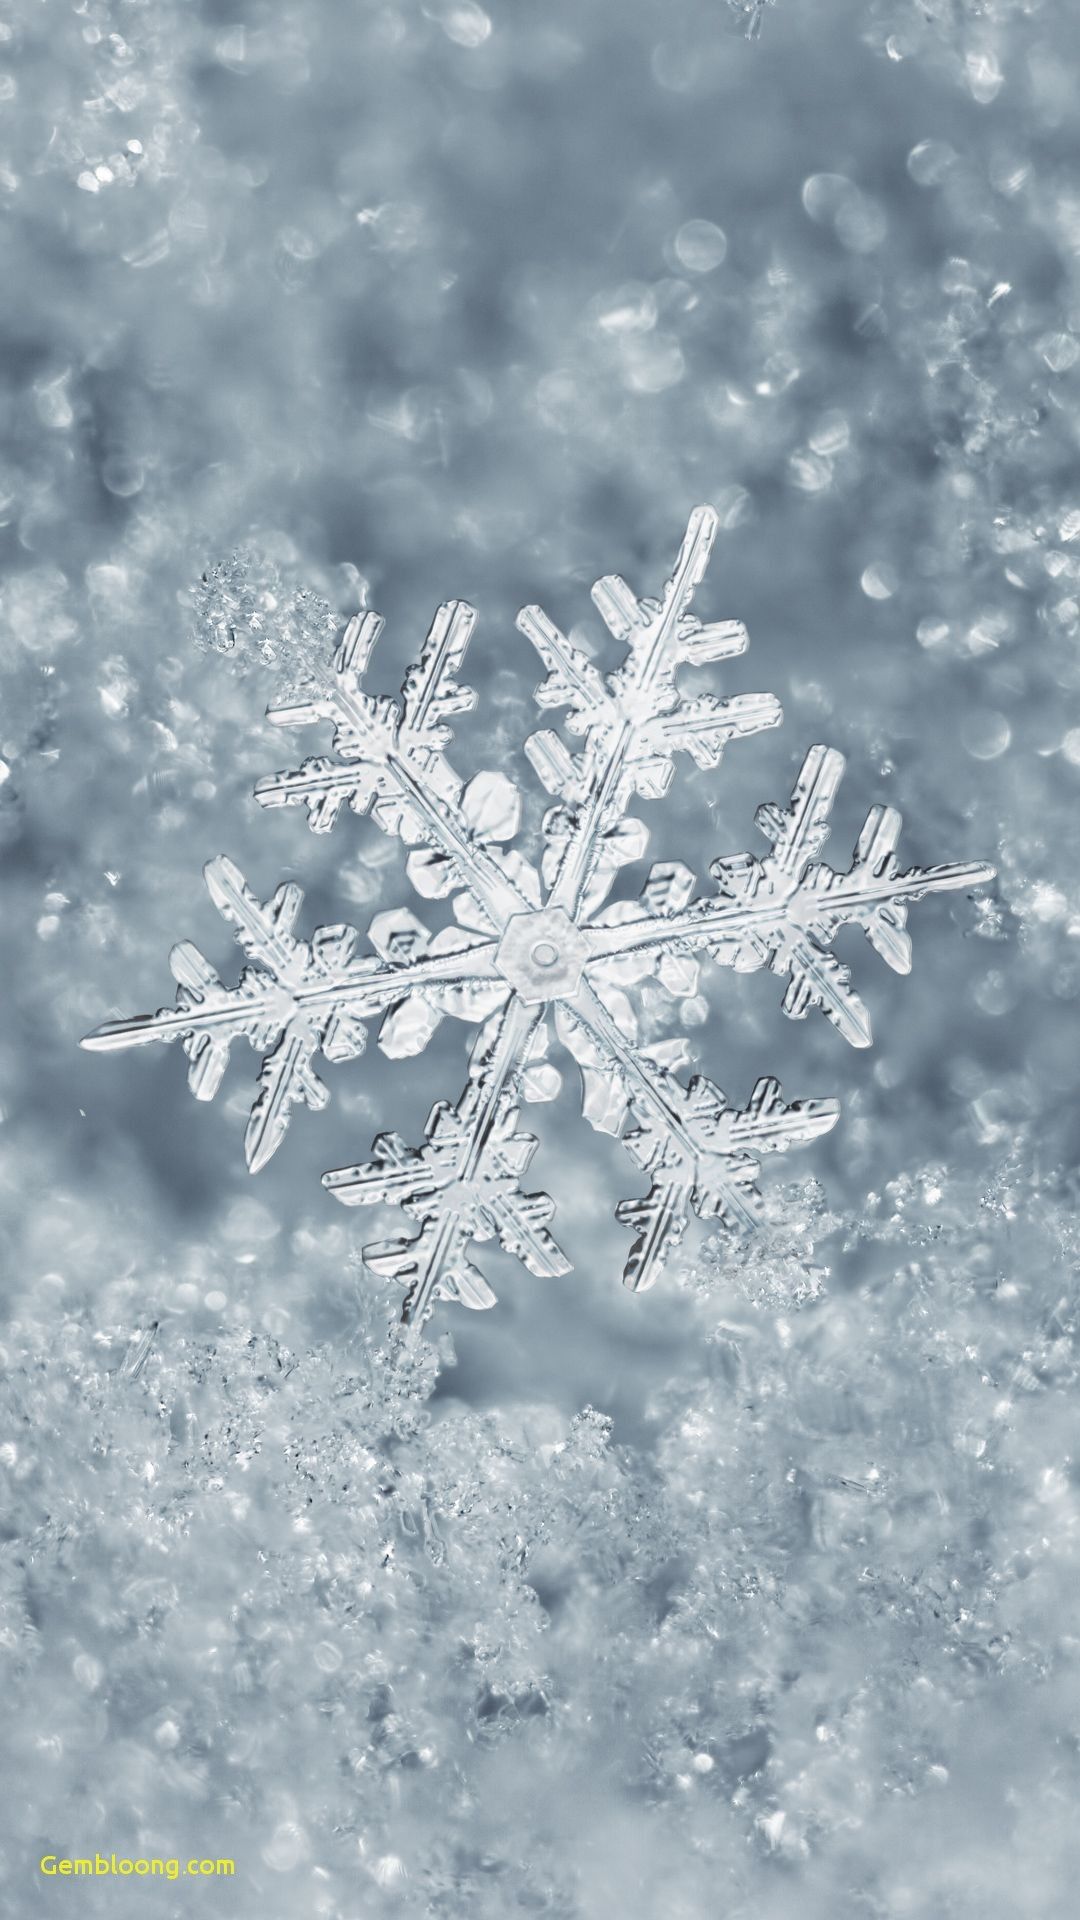 Wallpaper For iPhone Christmas Elegant Ice Snowflake